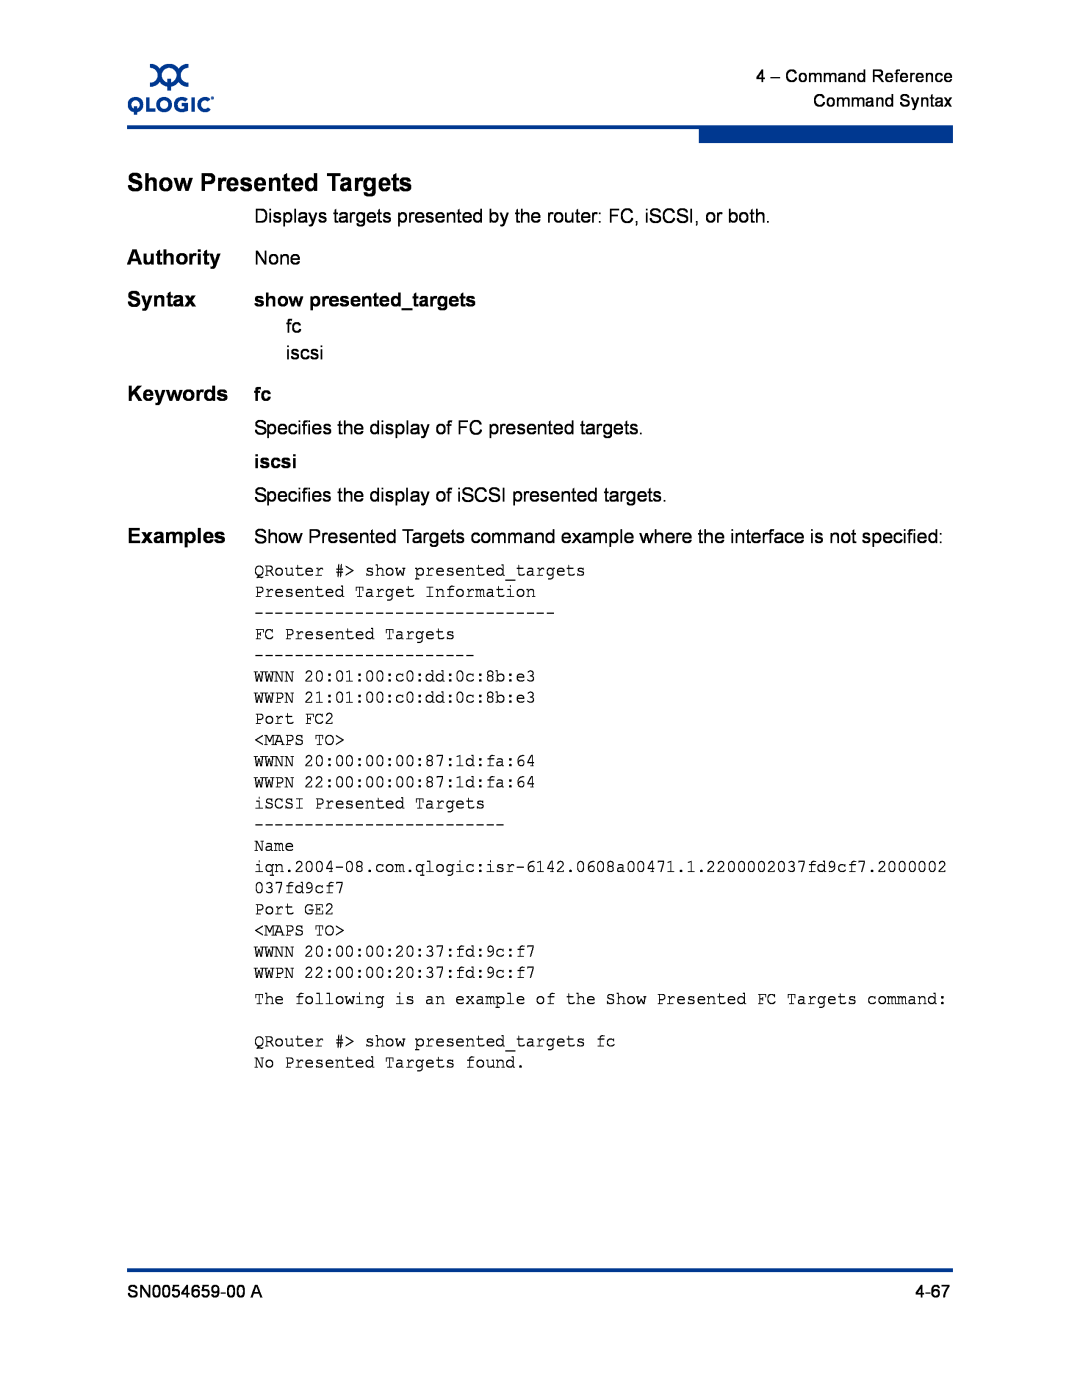 Q-Logic ISR6142 manual Show Presented Targets, Keywords fc 